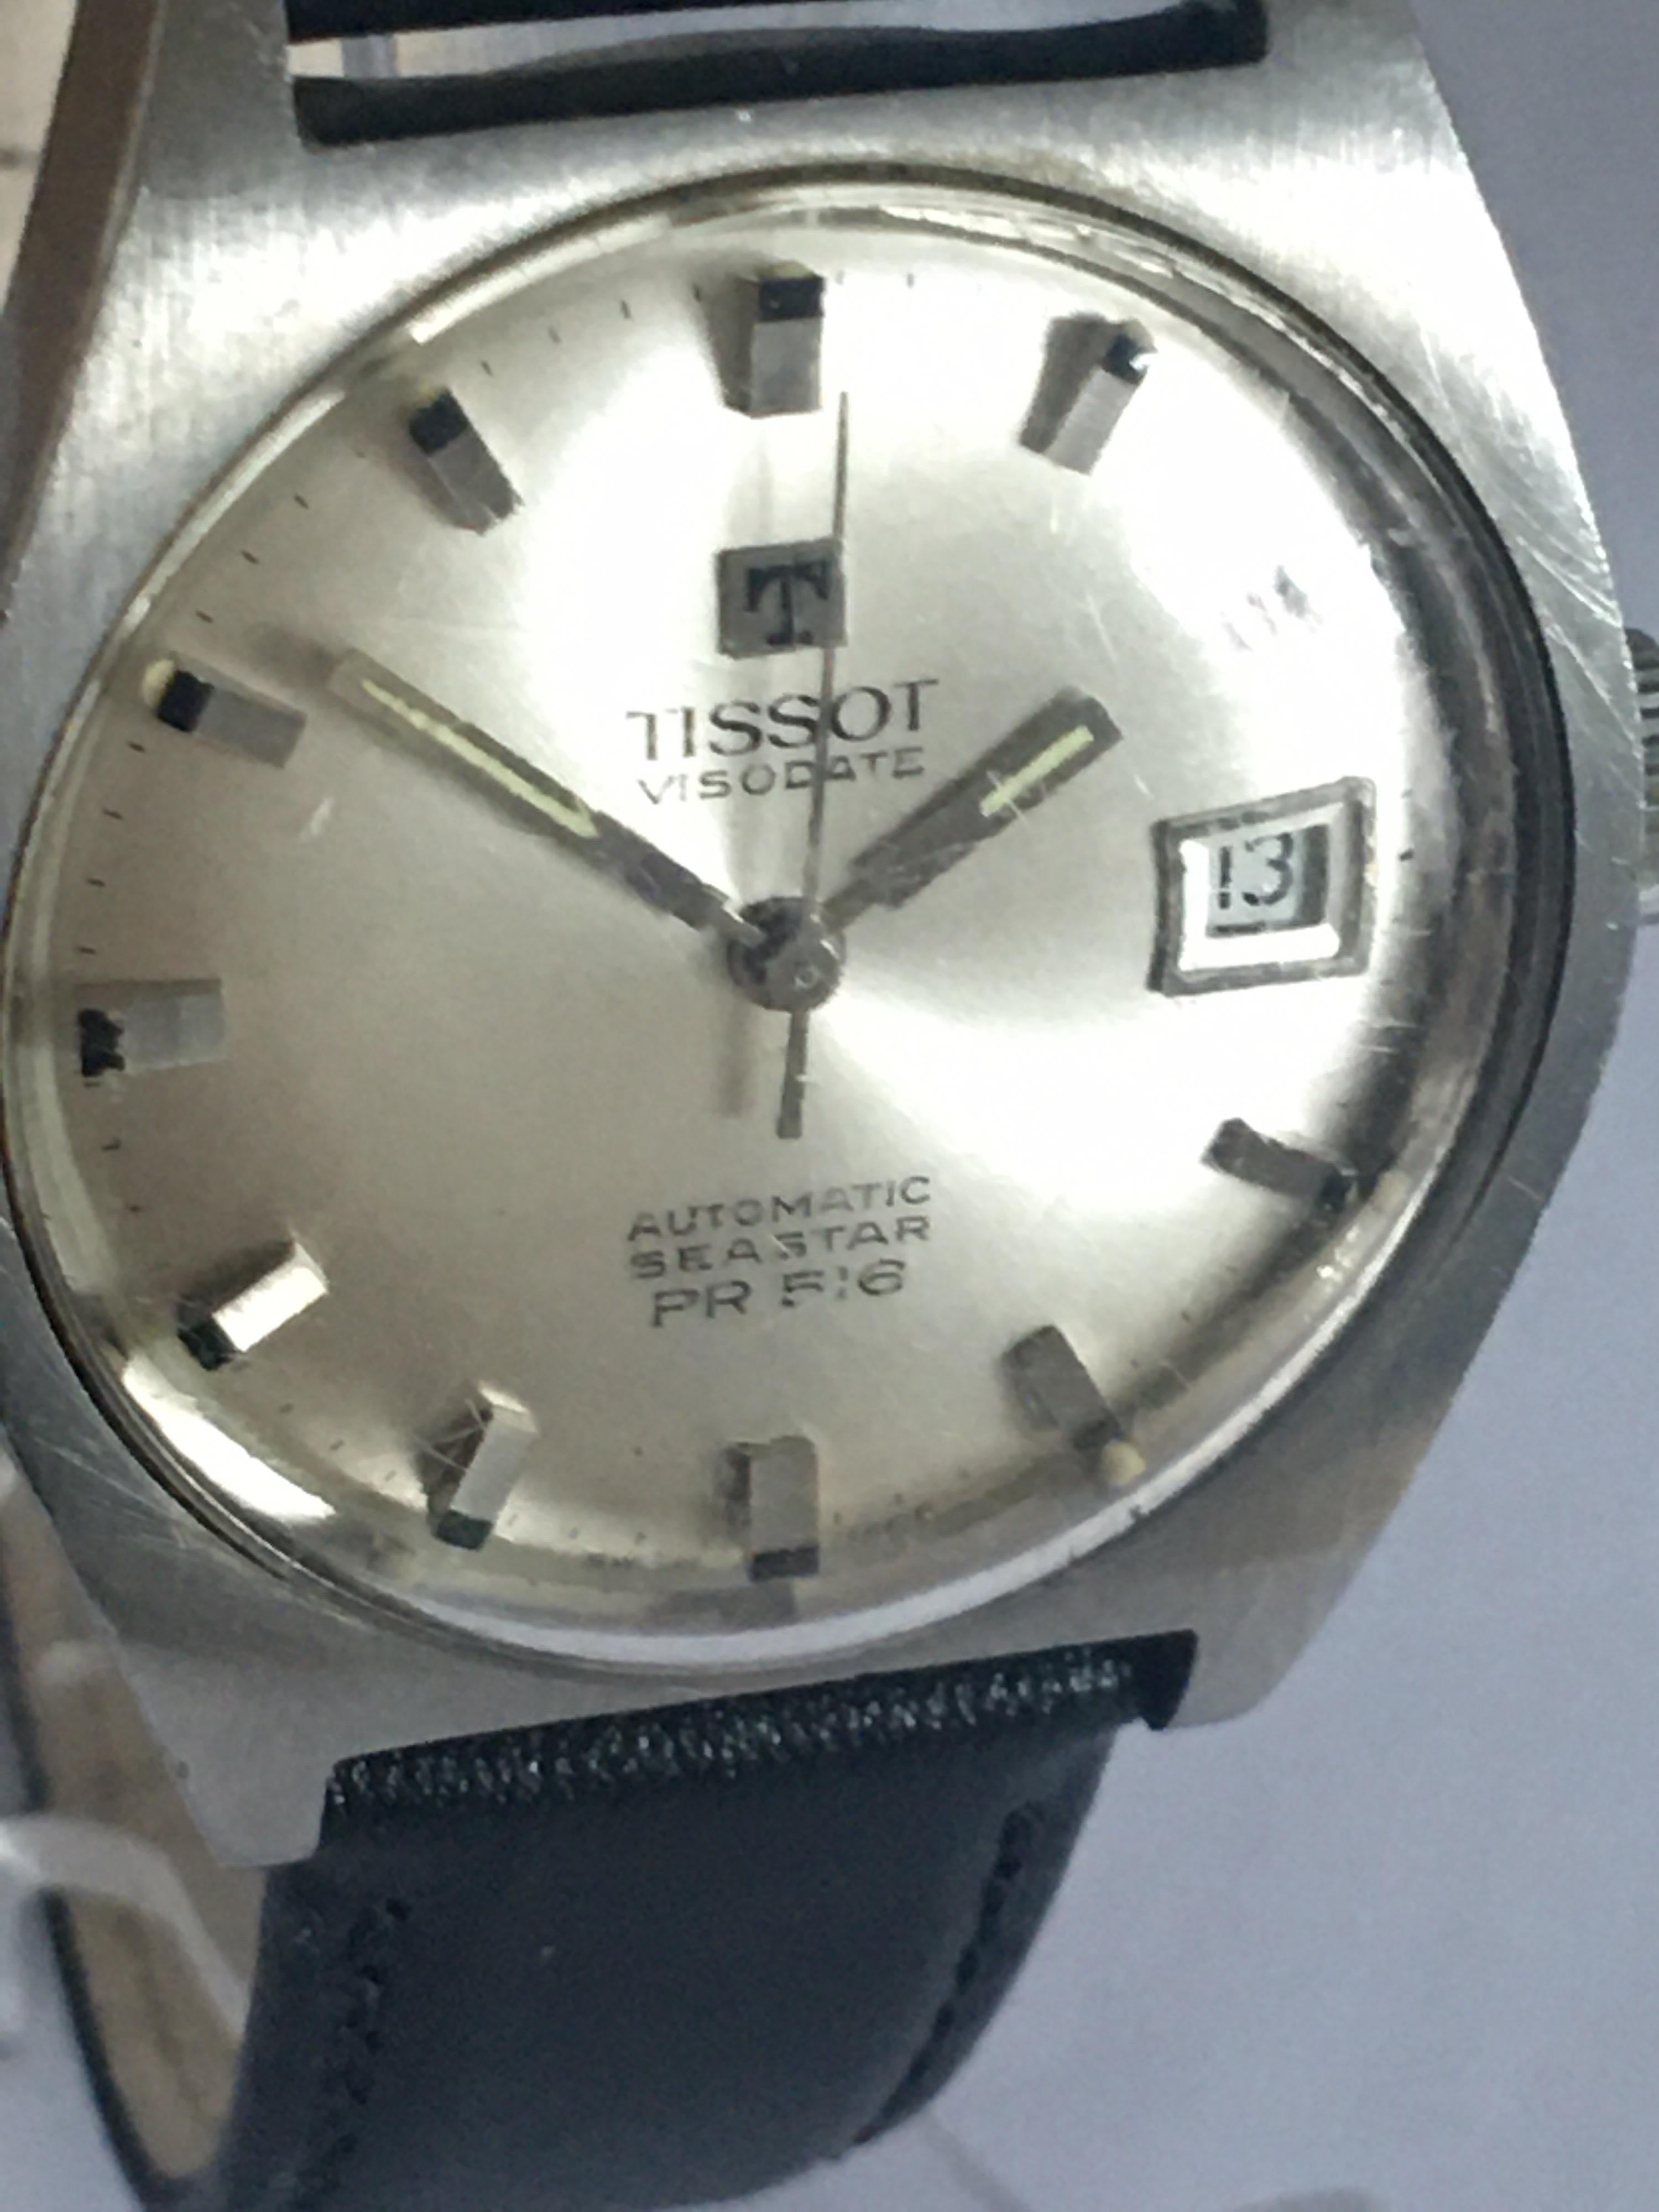 Vintage 1970s TISSOT Visodate Automatic Seastar PR516 Stainless Steel Watch 5